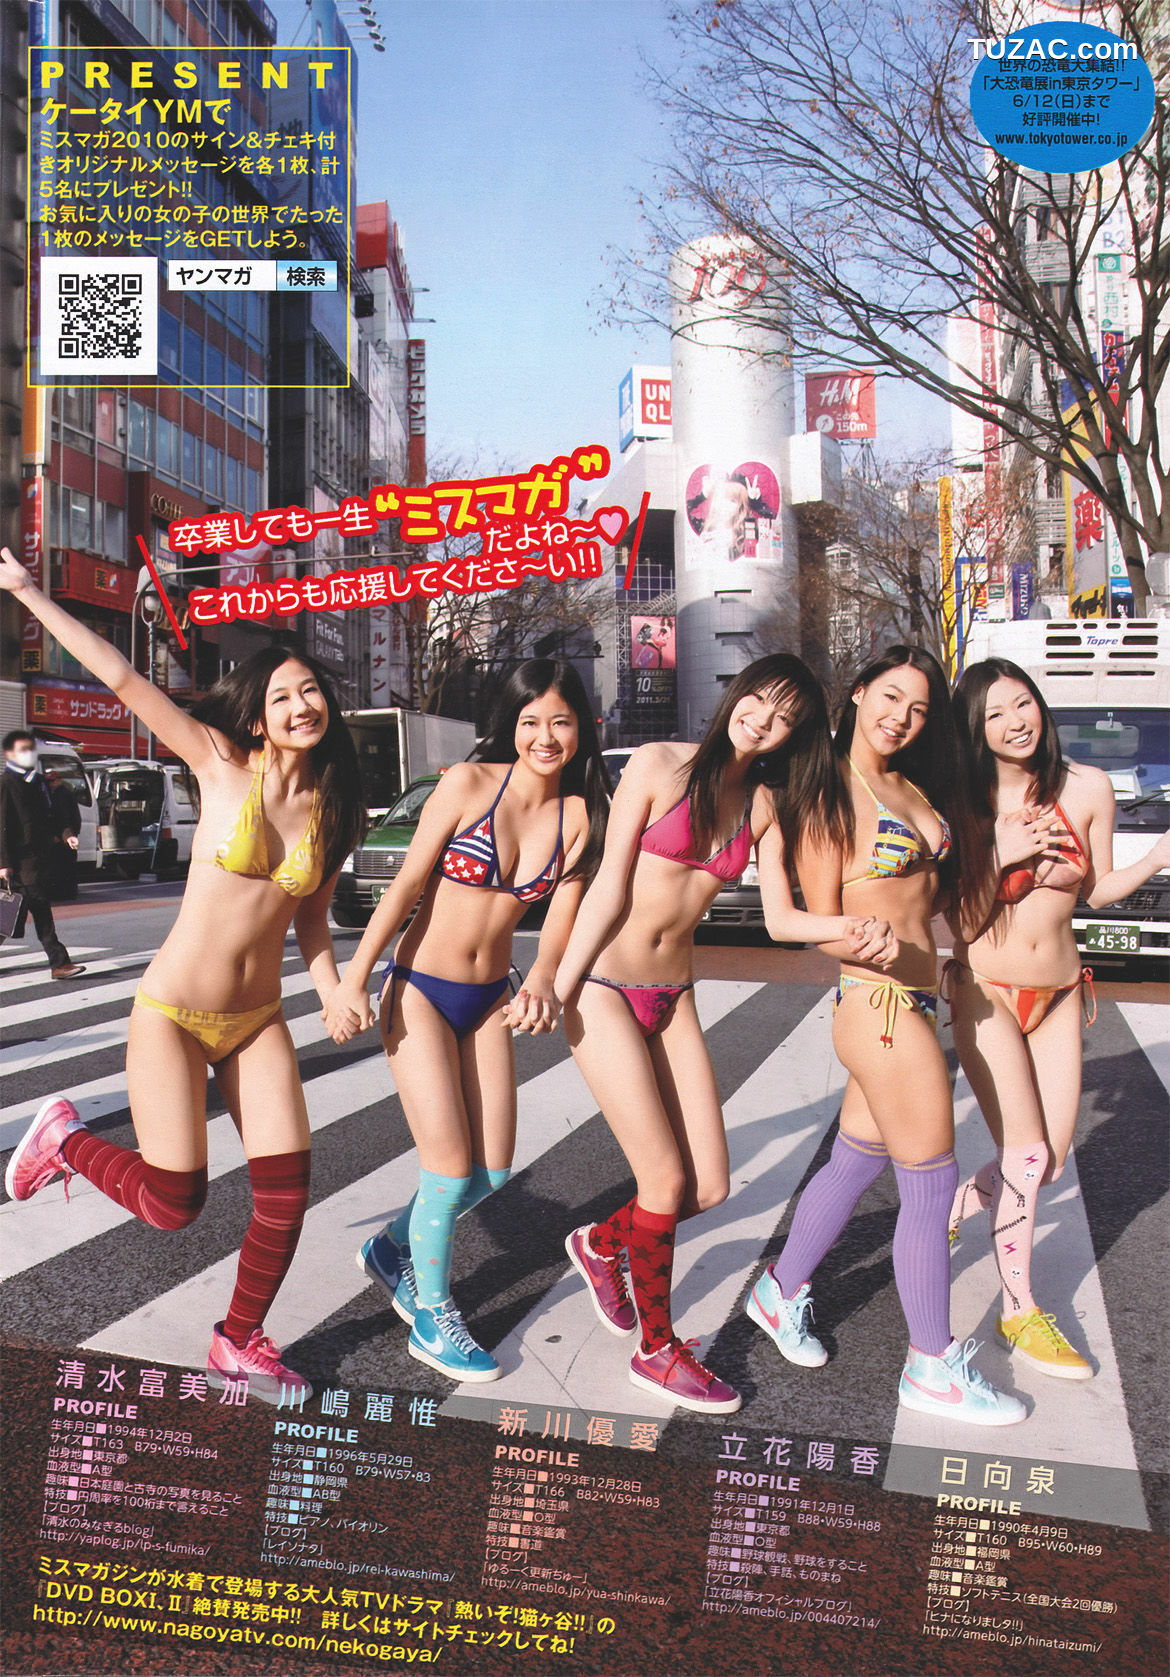 Young Magazine杂志写真_ 紗綾 Saaya 2011年No.17 写真杂志[16P]